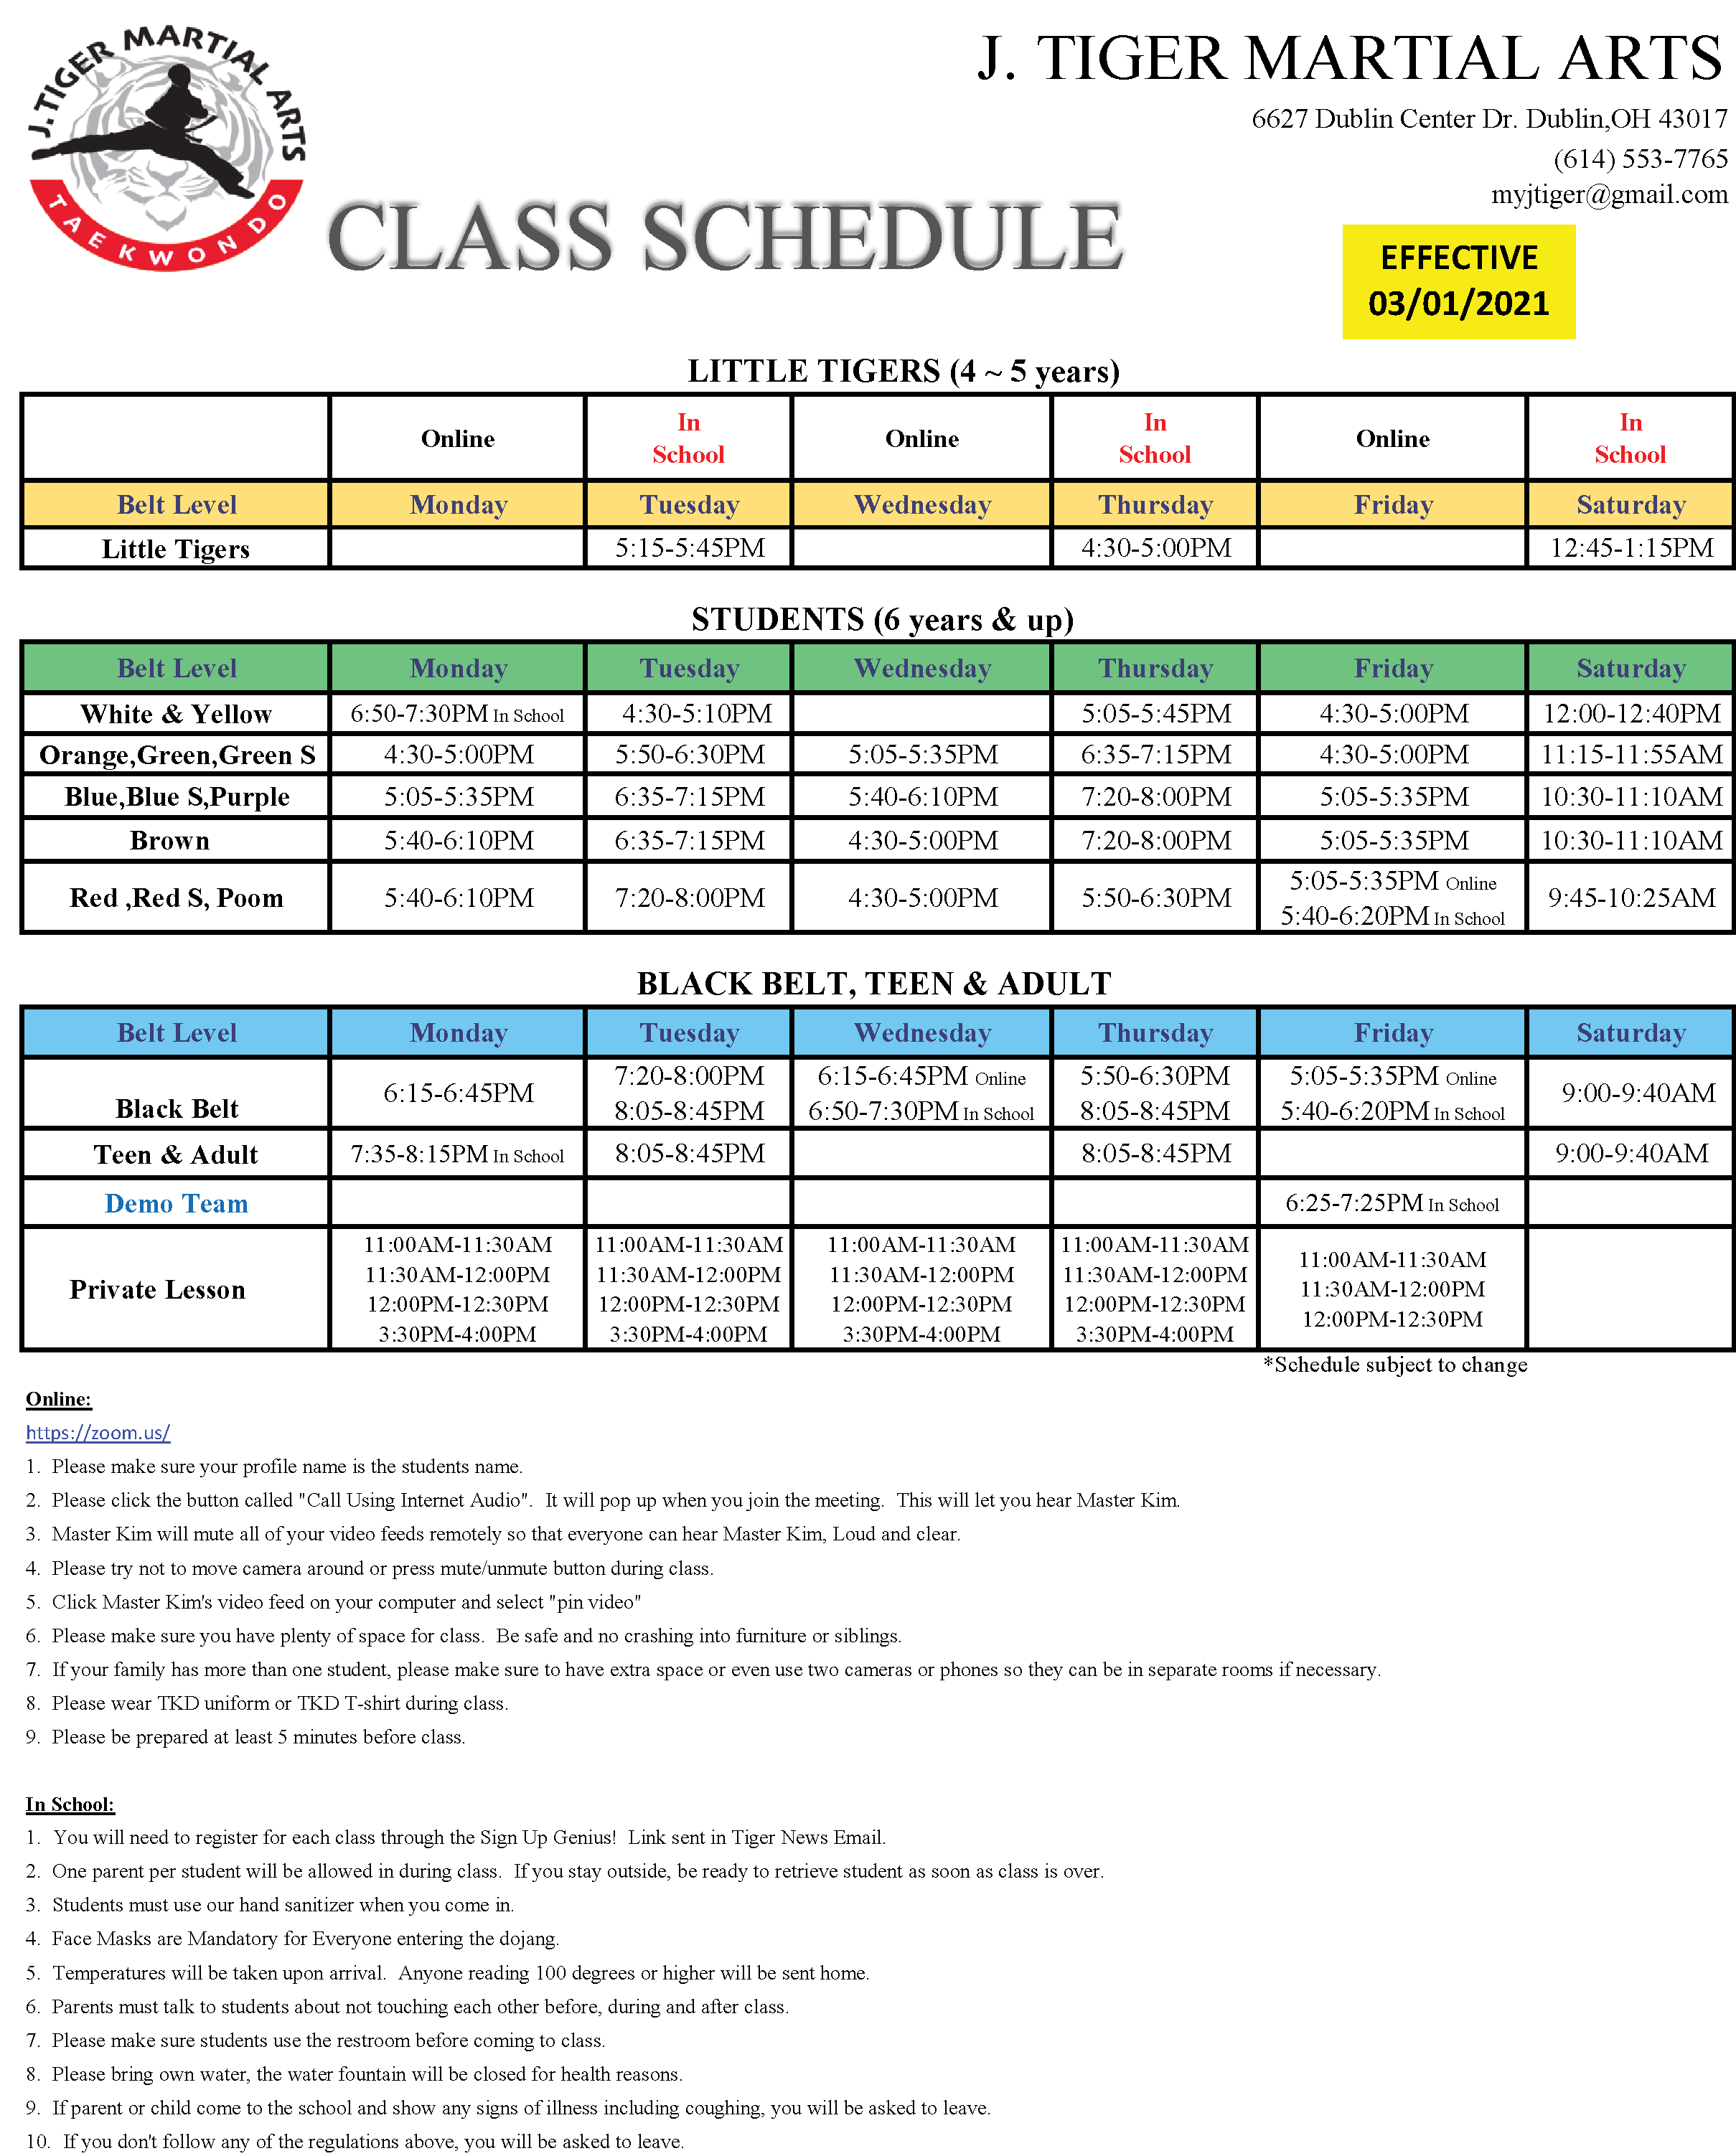 J Tiger Taekwondo Class Schedule J Tiger Martial Arts